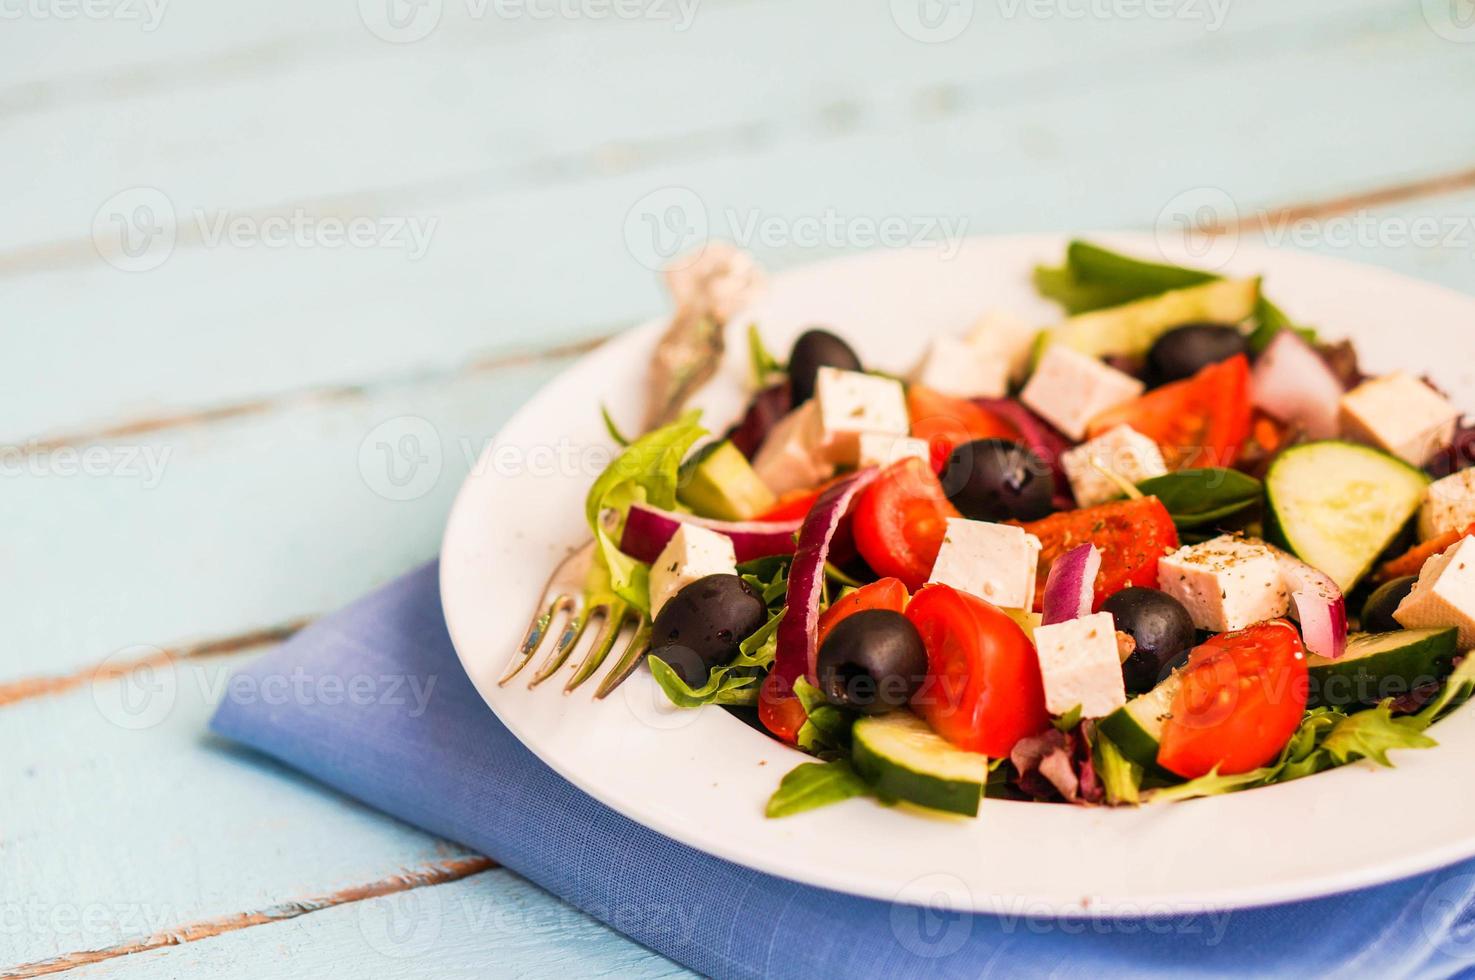 salade grecque sur fond de bois photo